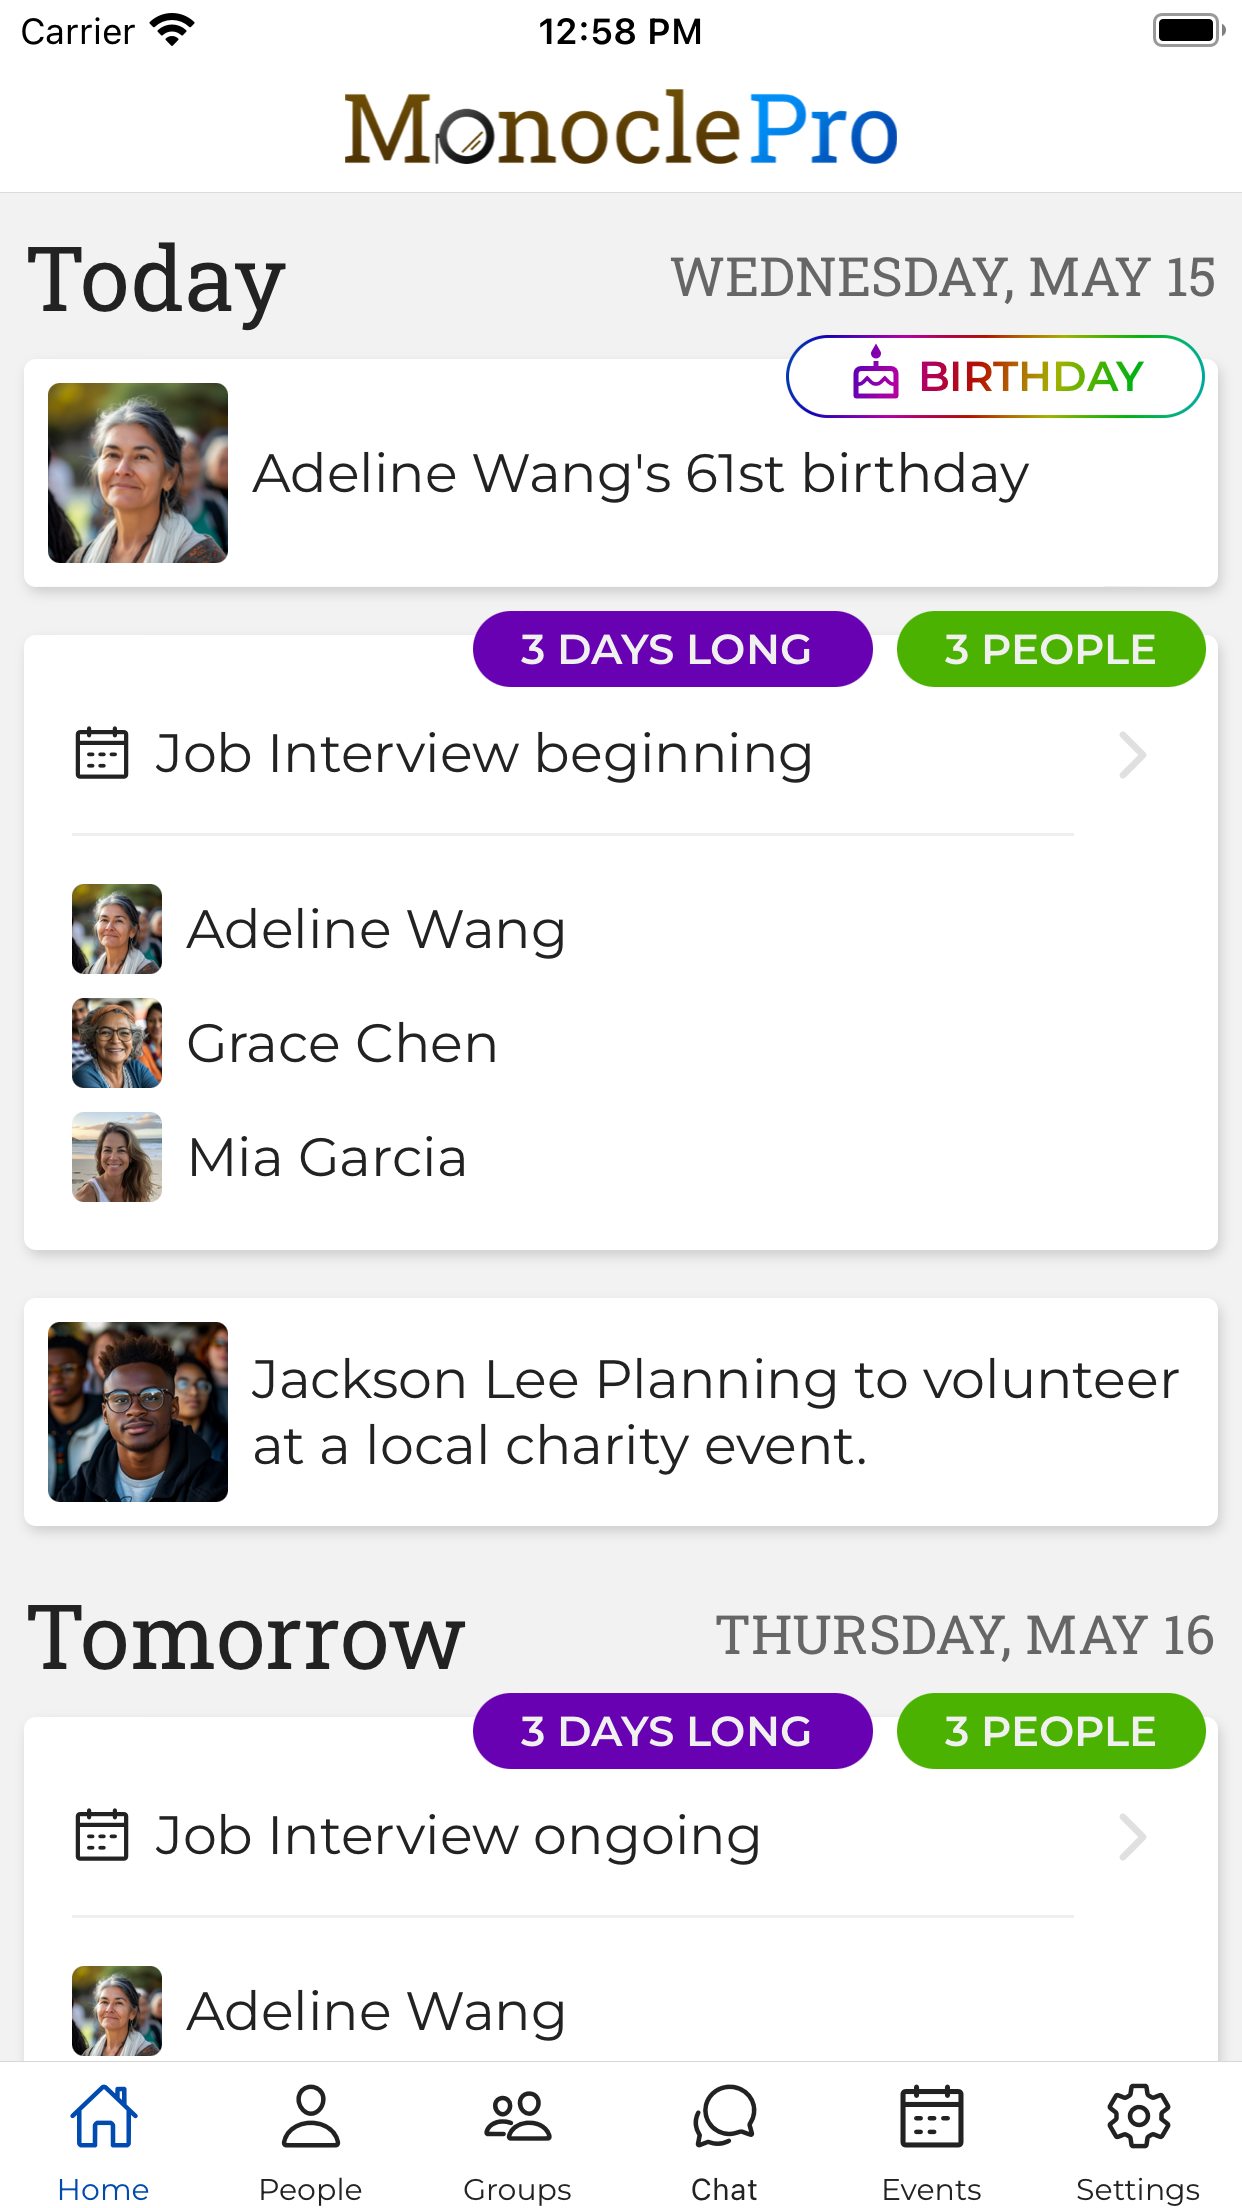 App screenshot - Upcoming events